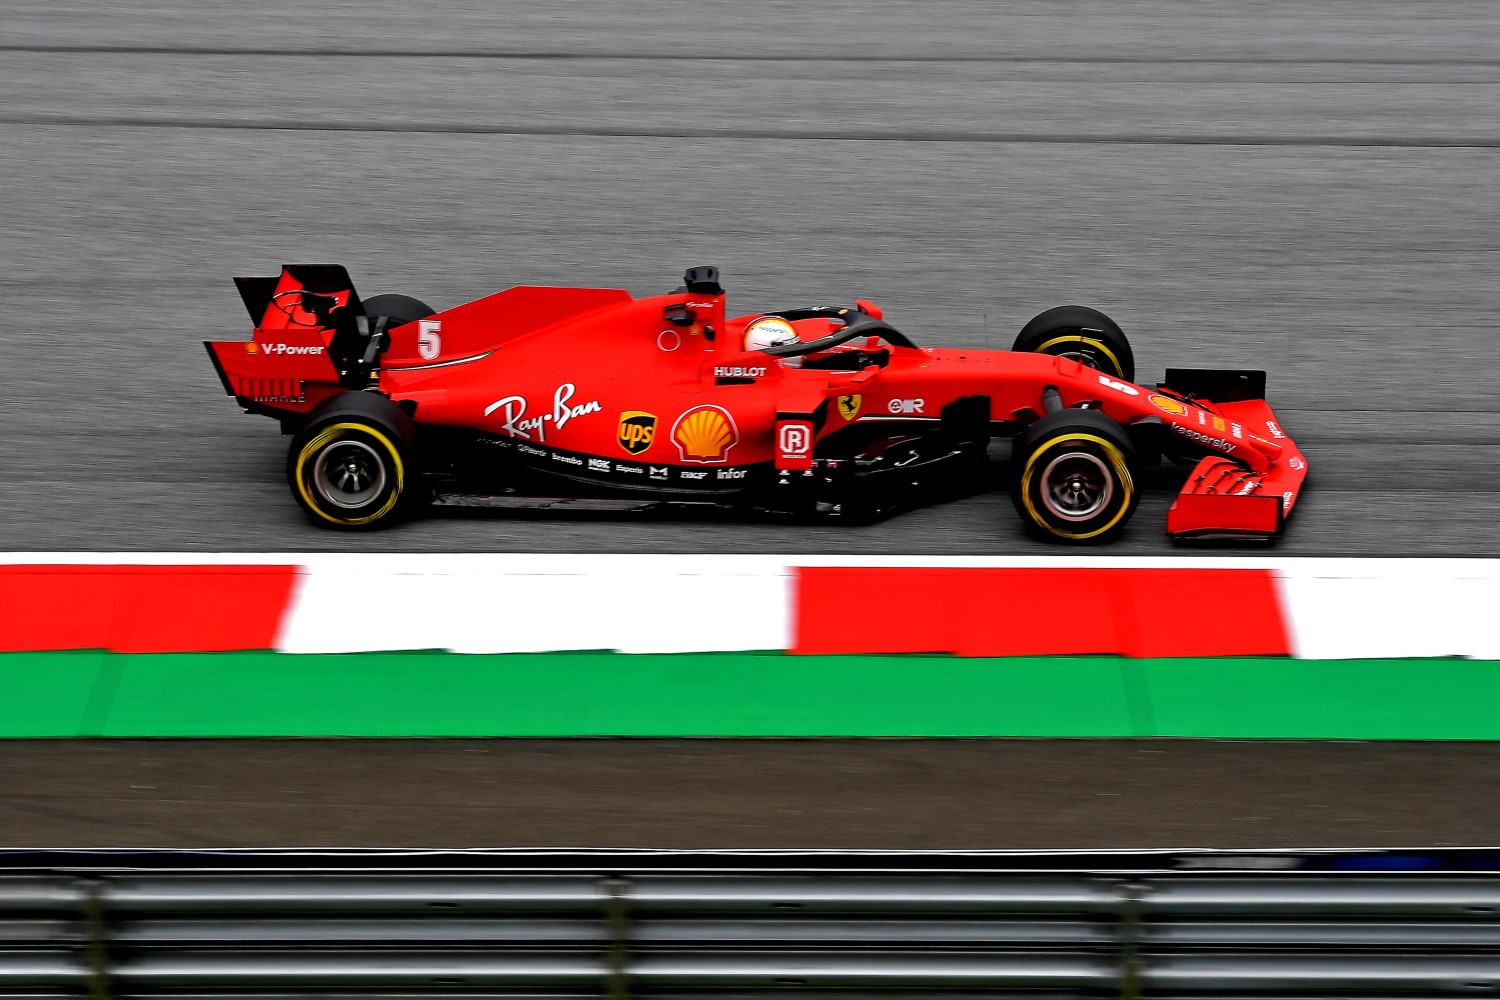 Binotto has turned Ferrari into a 2nd tier team